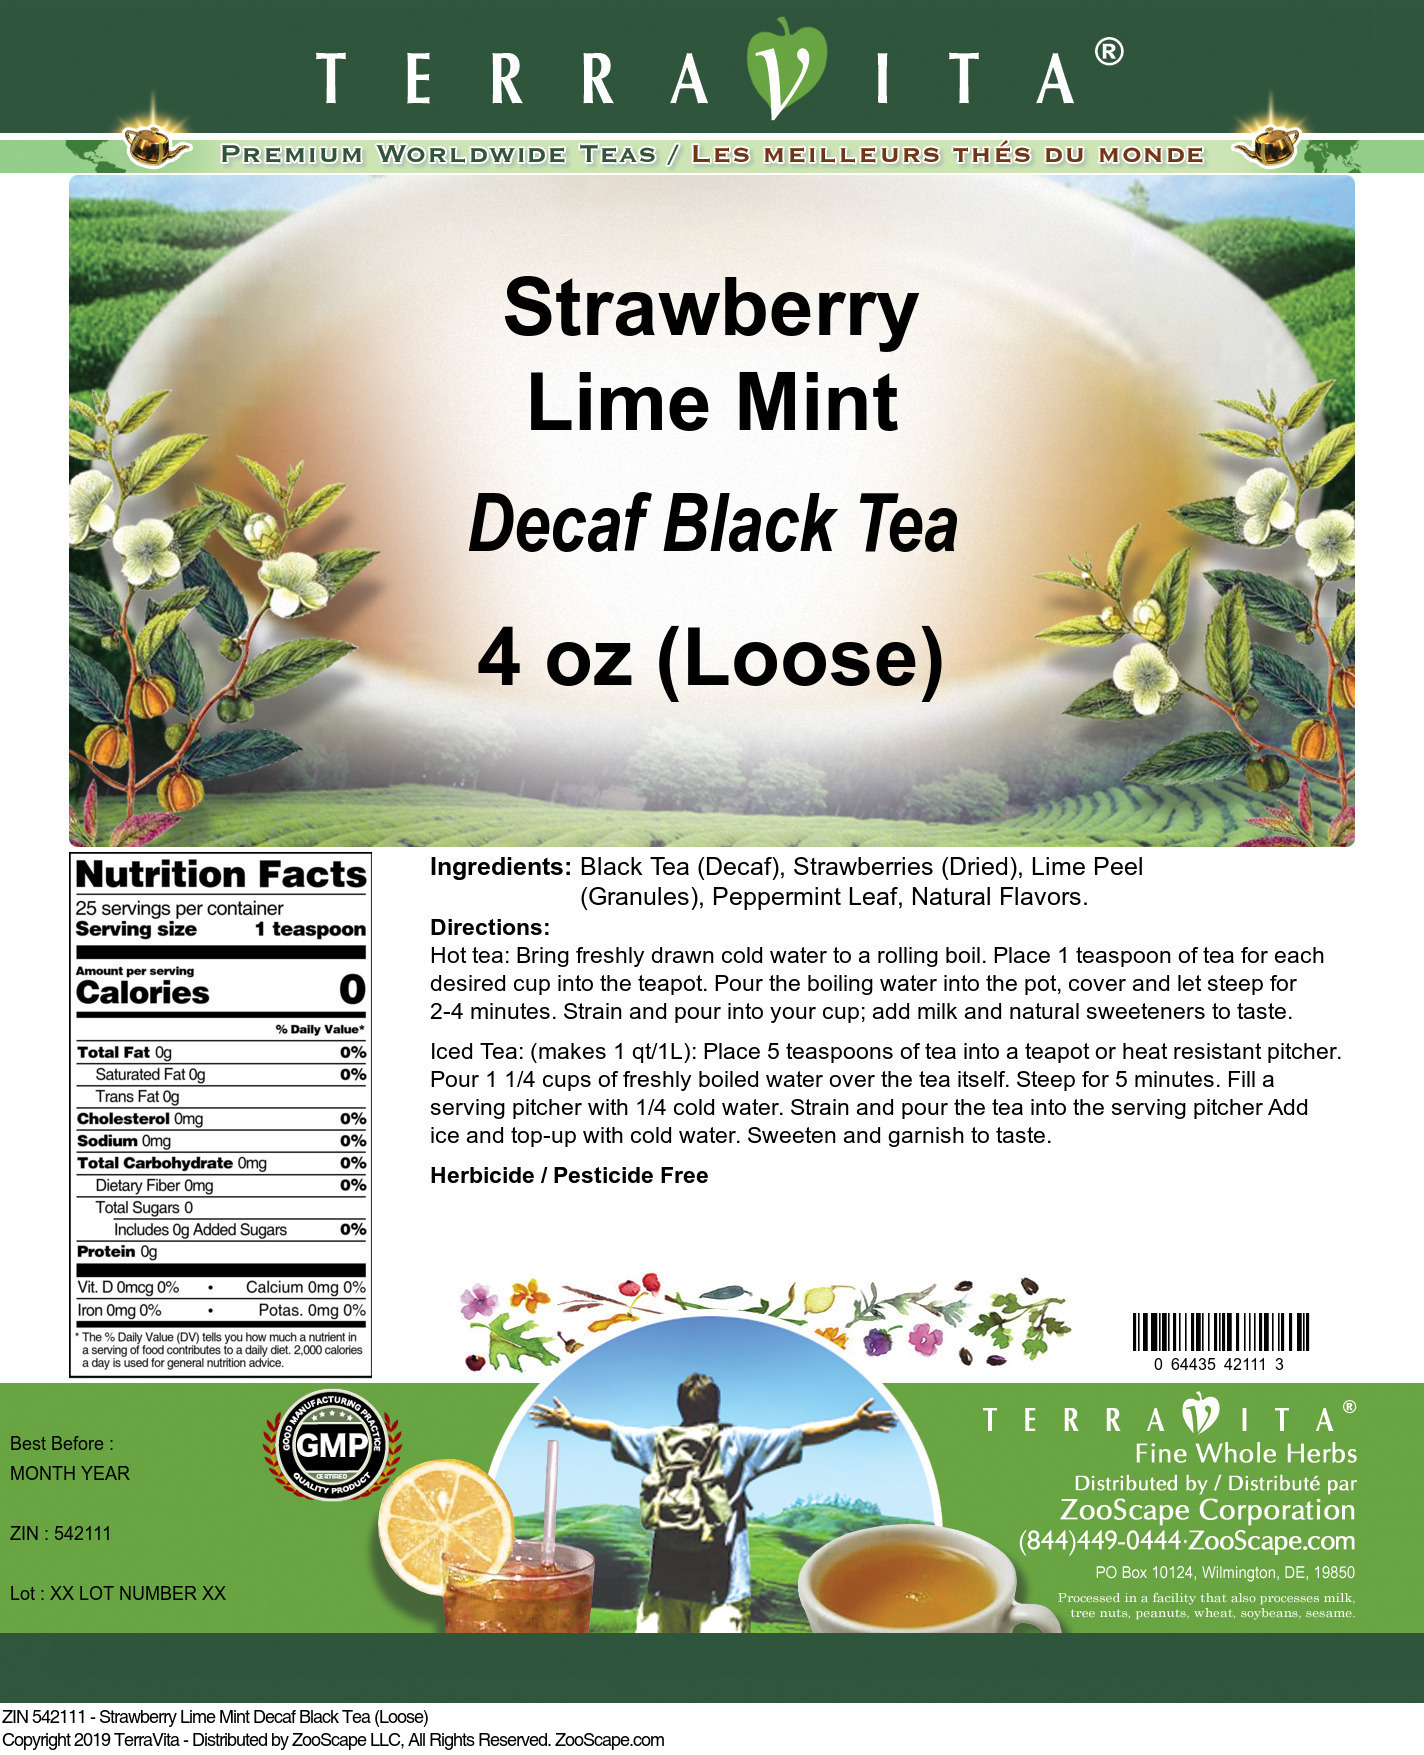 Strawberry Lime Mint Decaf Black Tea (Loose) - Label